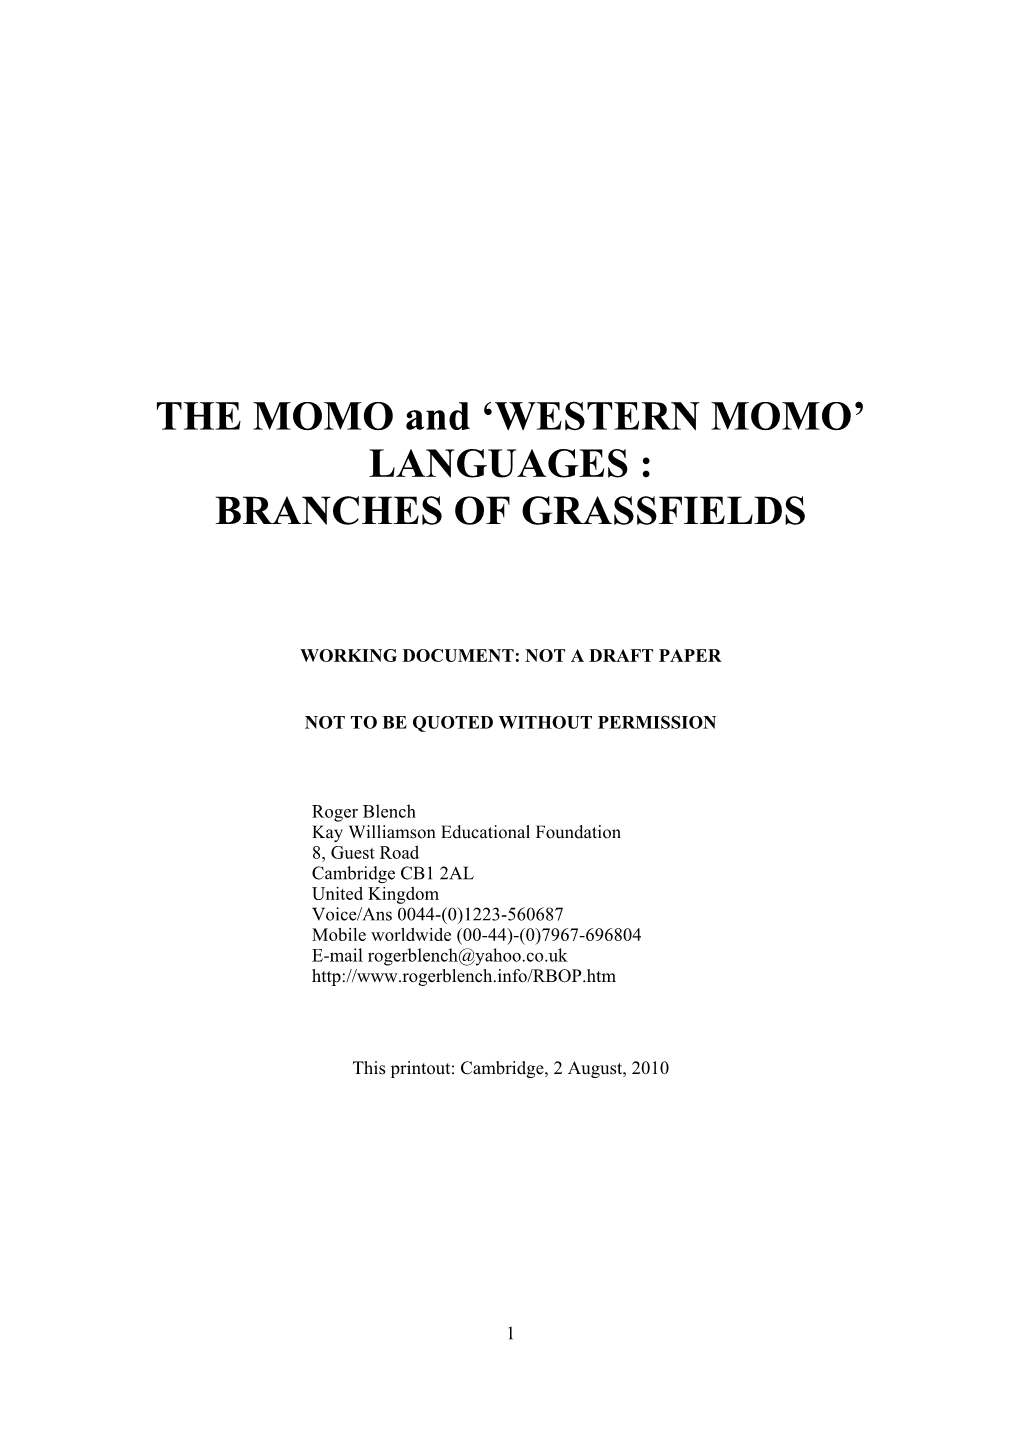 'Western Momo' Languages